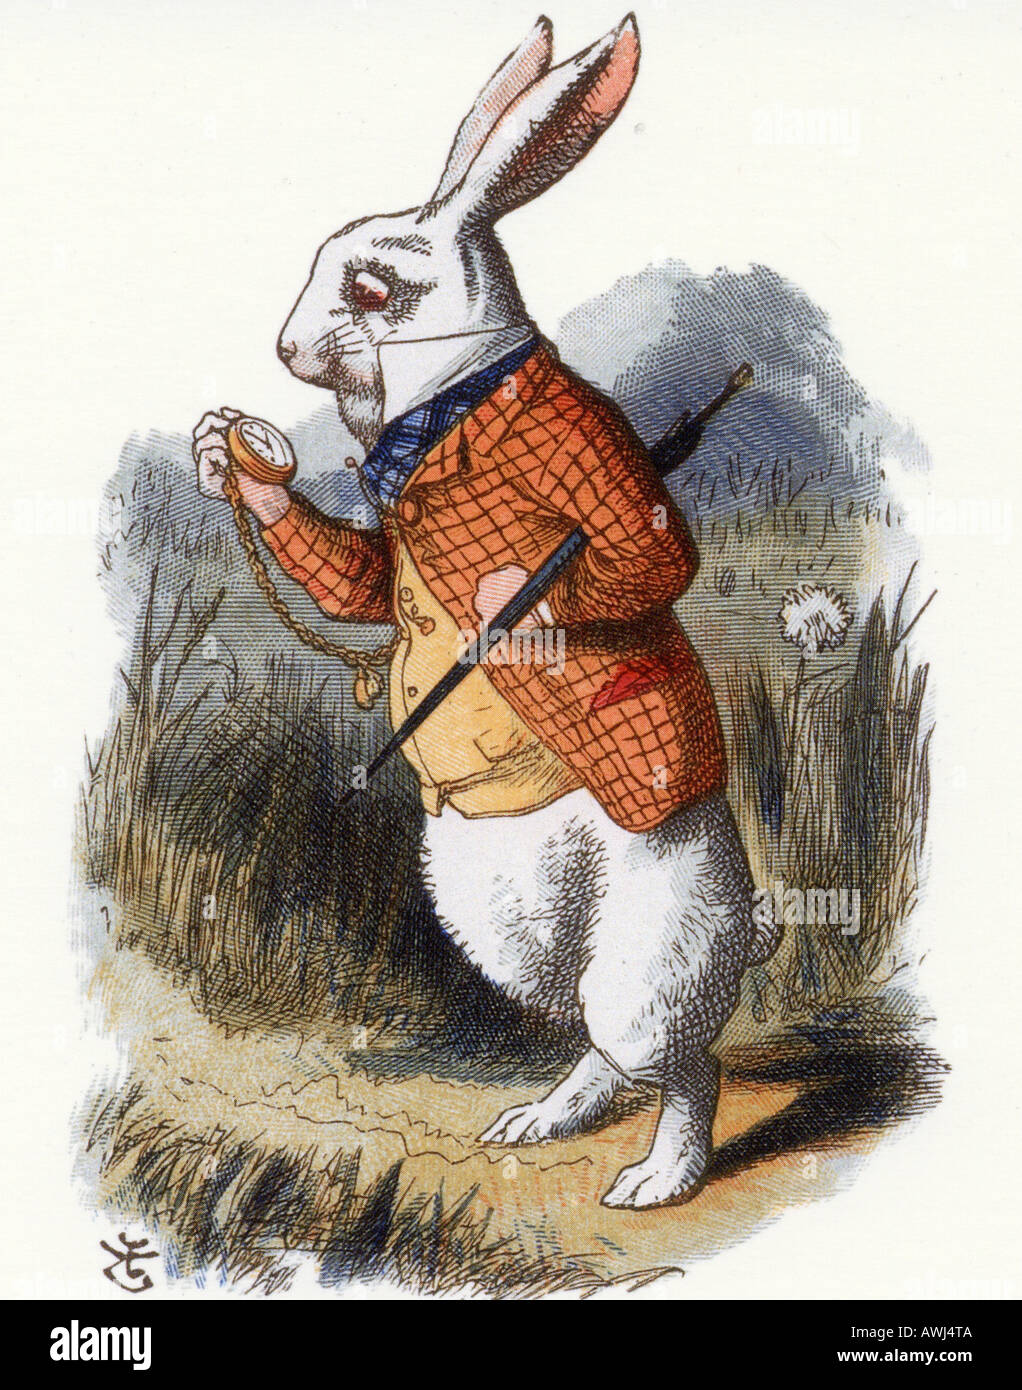 ALICE'S ADVENTURES IN WONDERLAND  The White Rabbit - see Description below for details Stock Photo